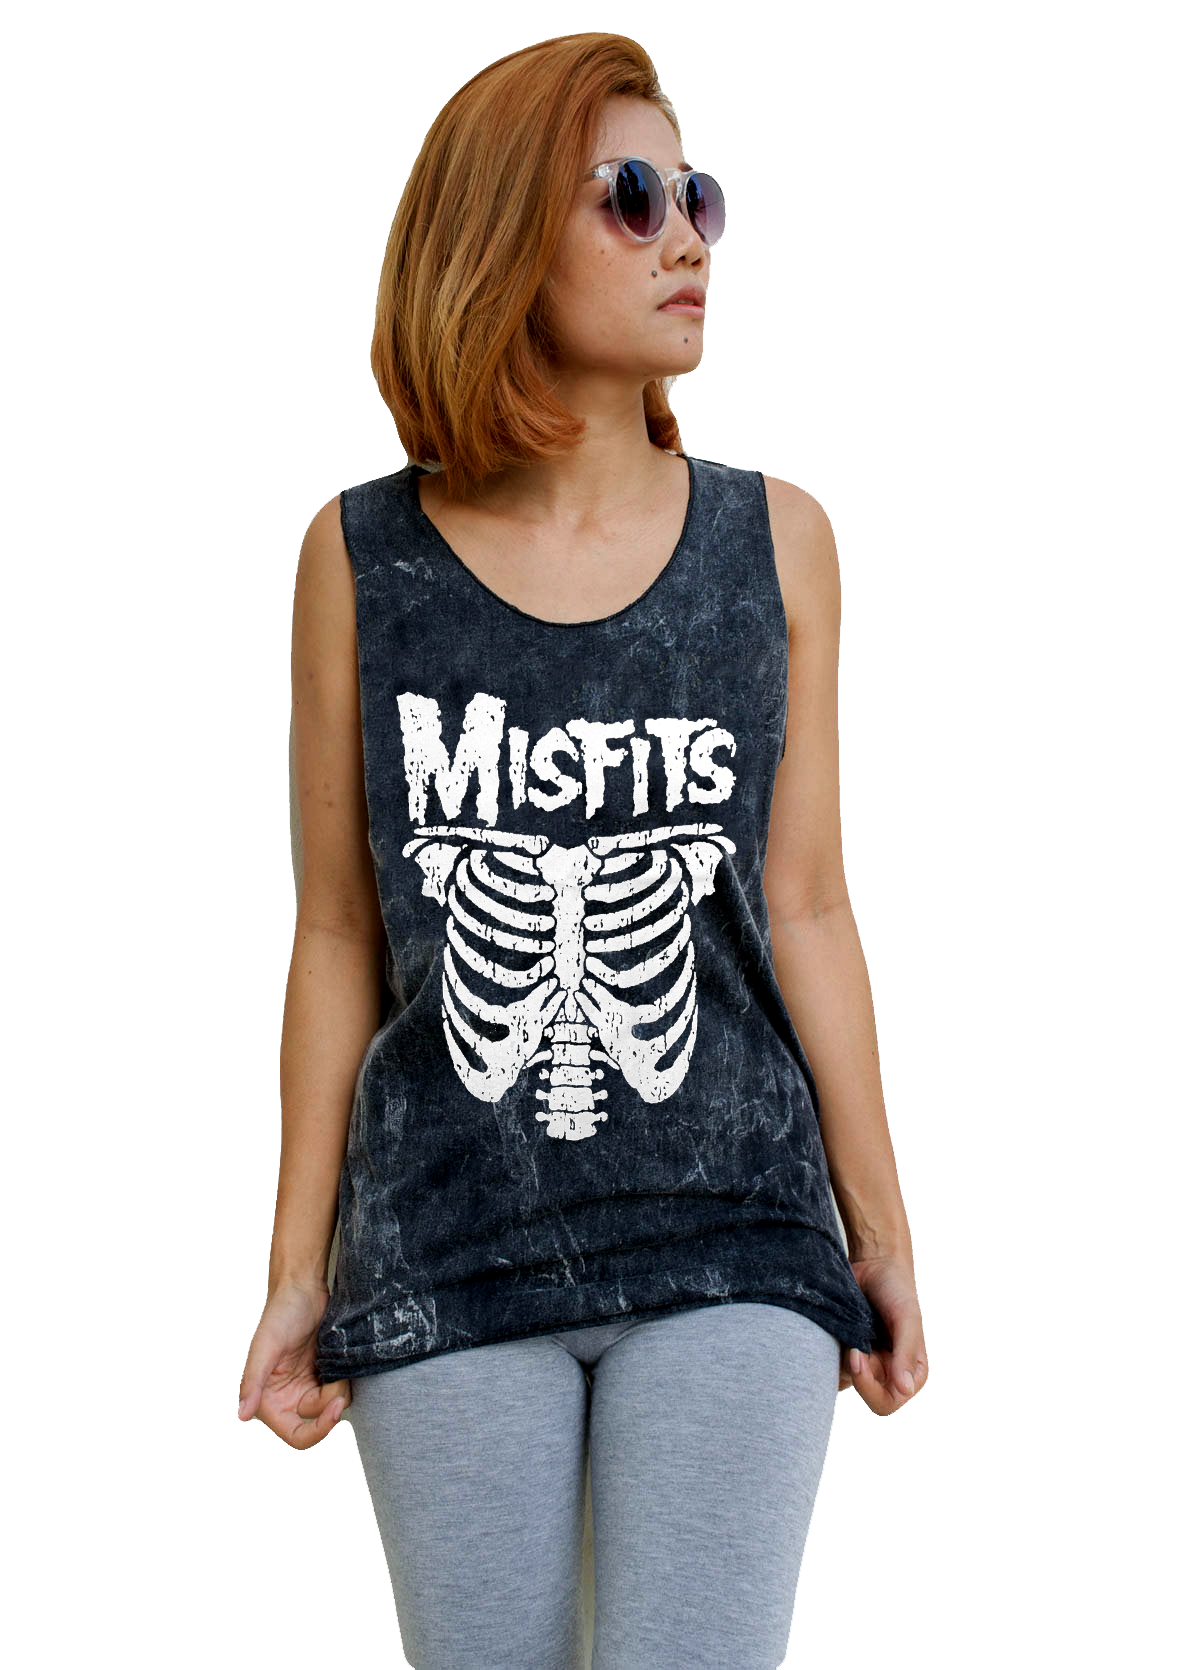 Unisex Misfits Tank-Top Singlet vest Sleeveless T-shirt